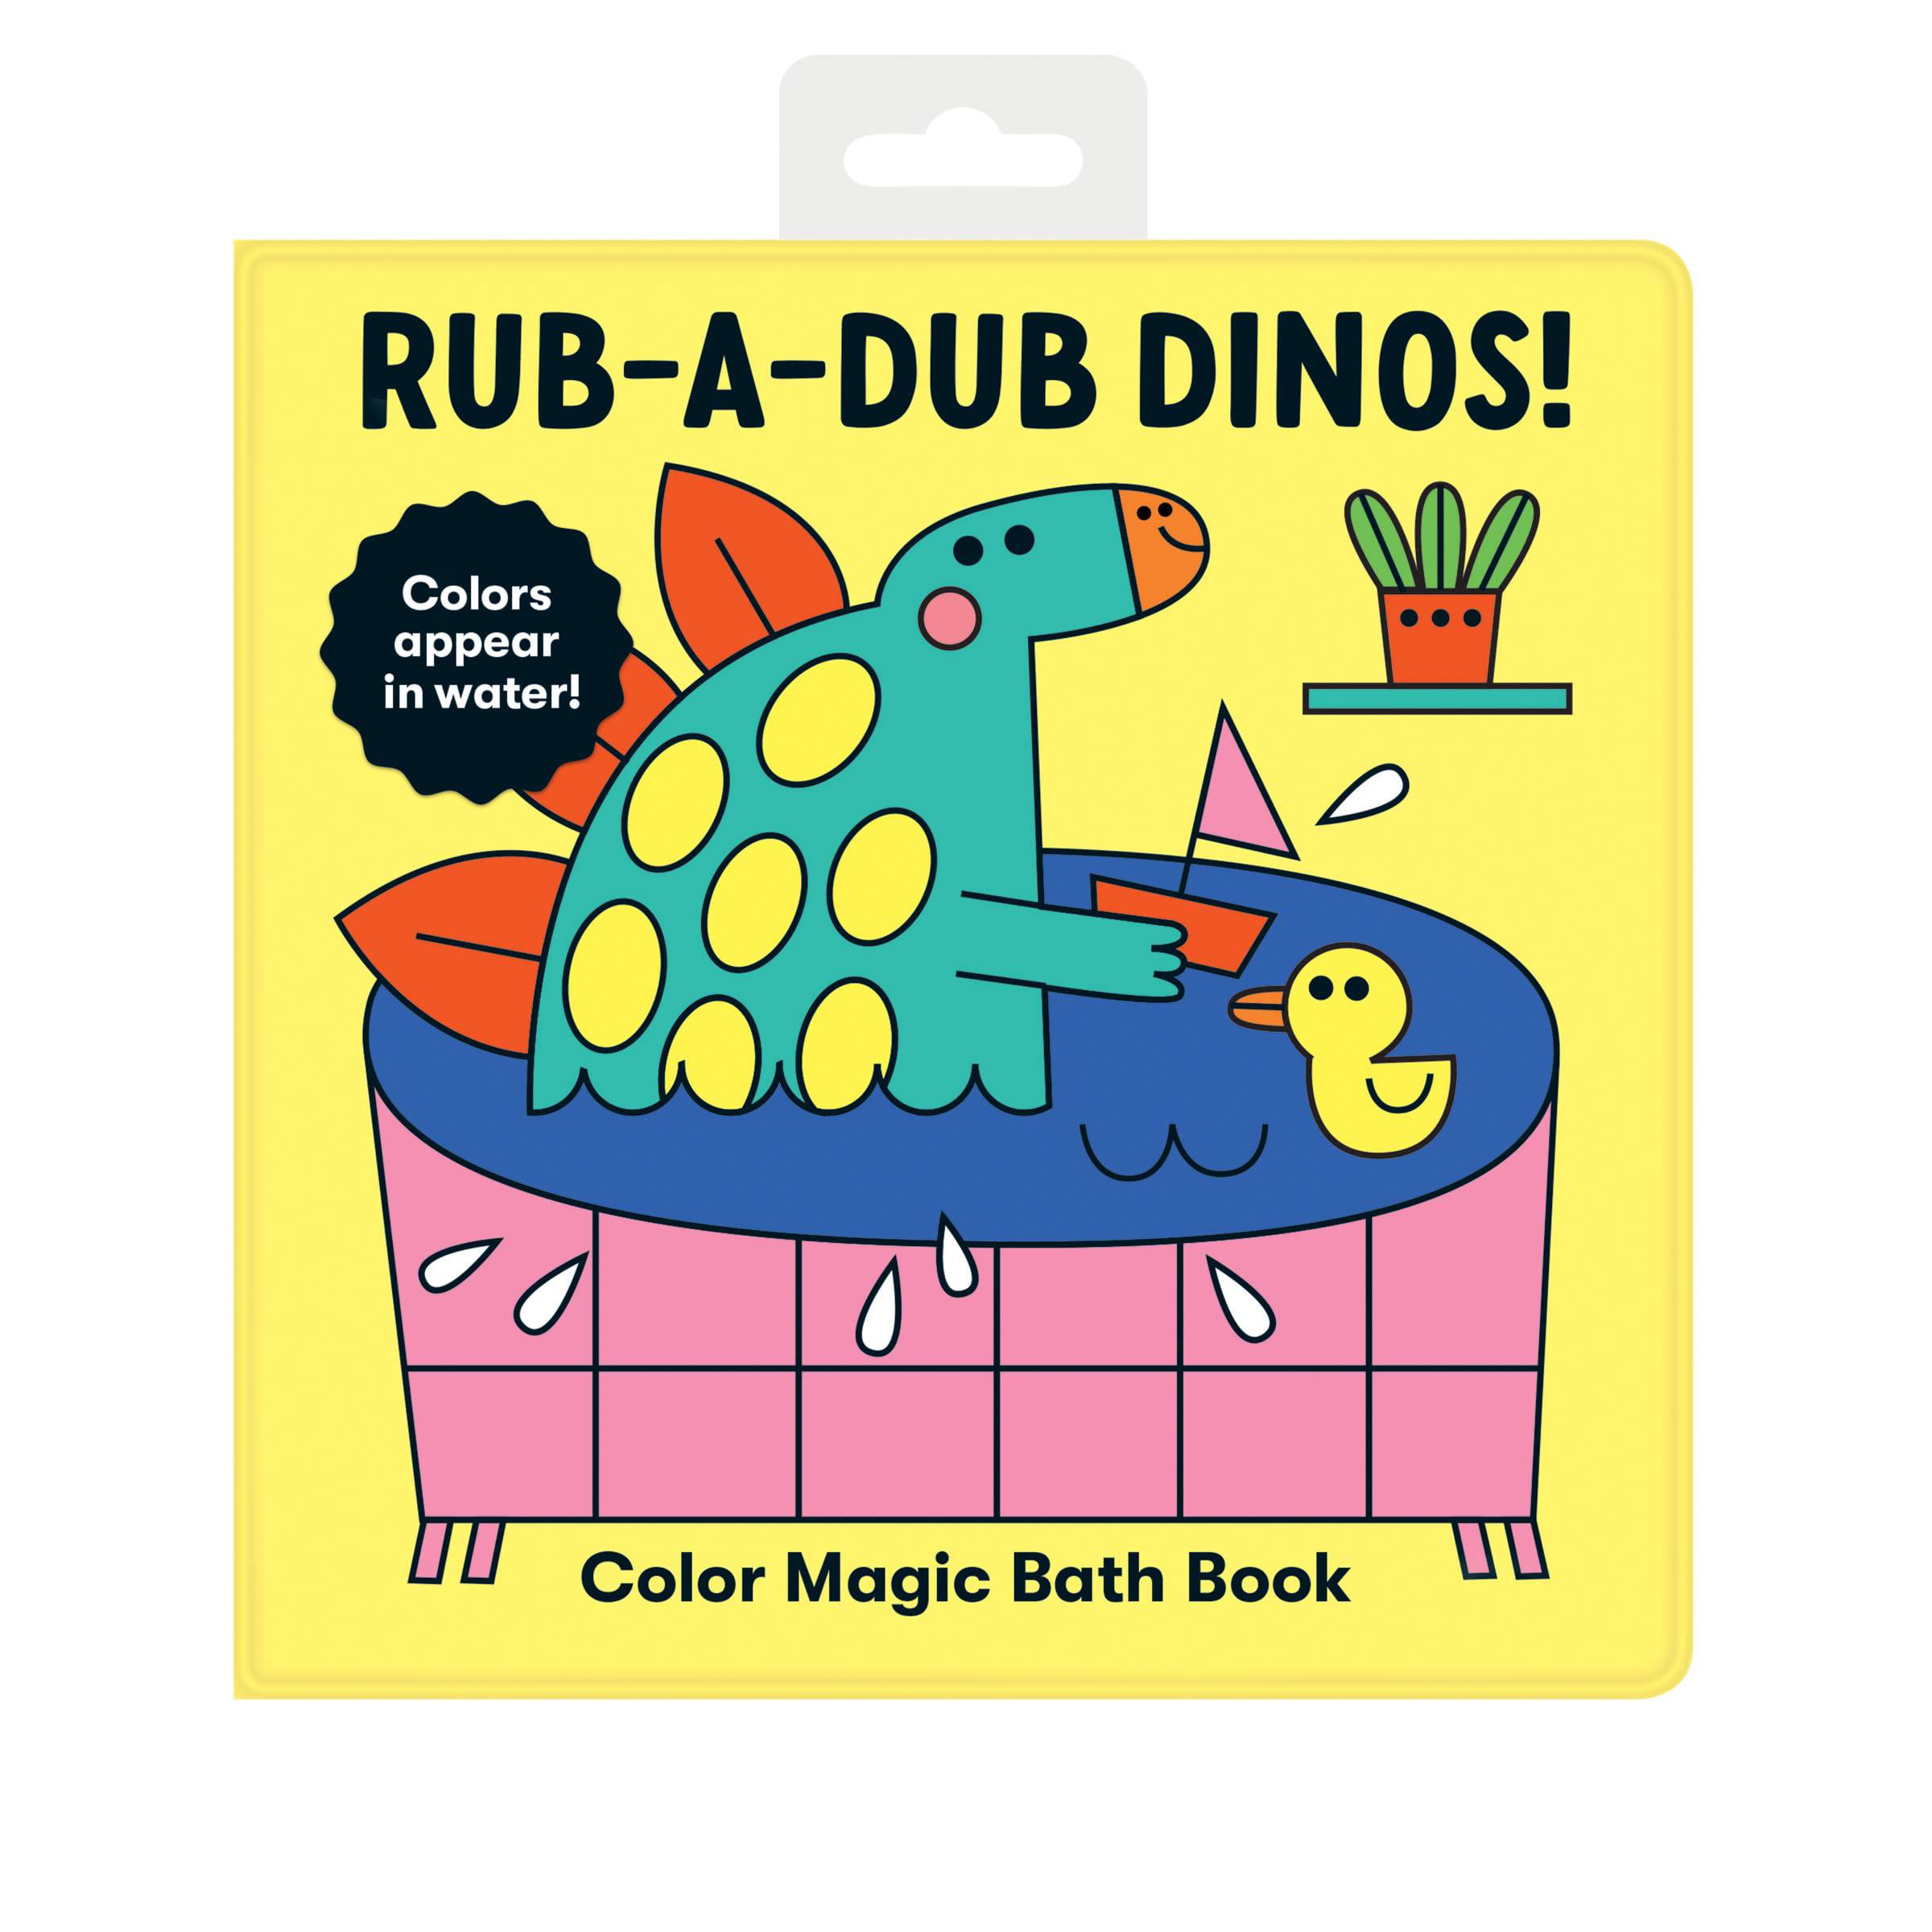 Rub-a-Dub Dinos! Color Magic Bath Book - Twinkle Twinkle Little One